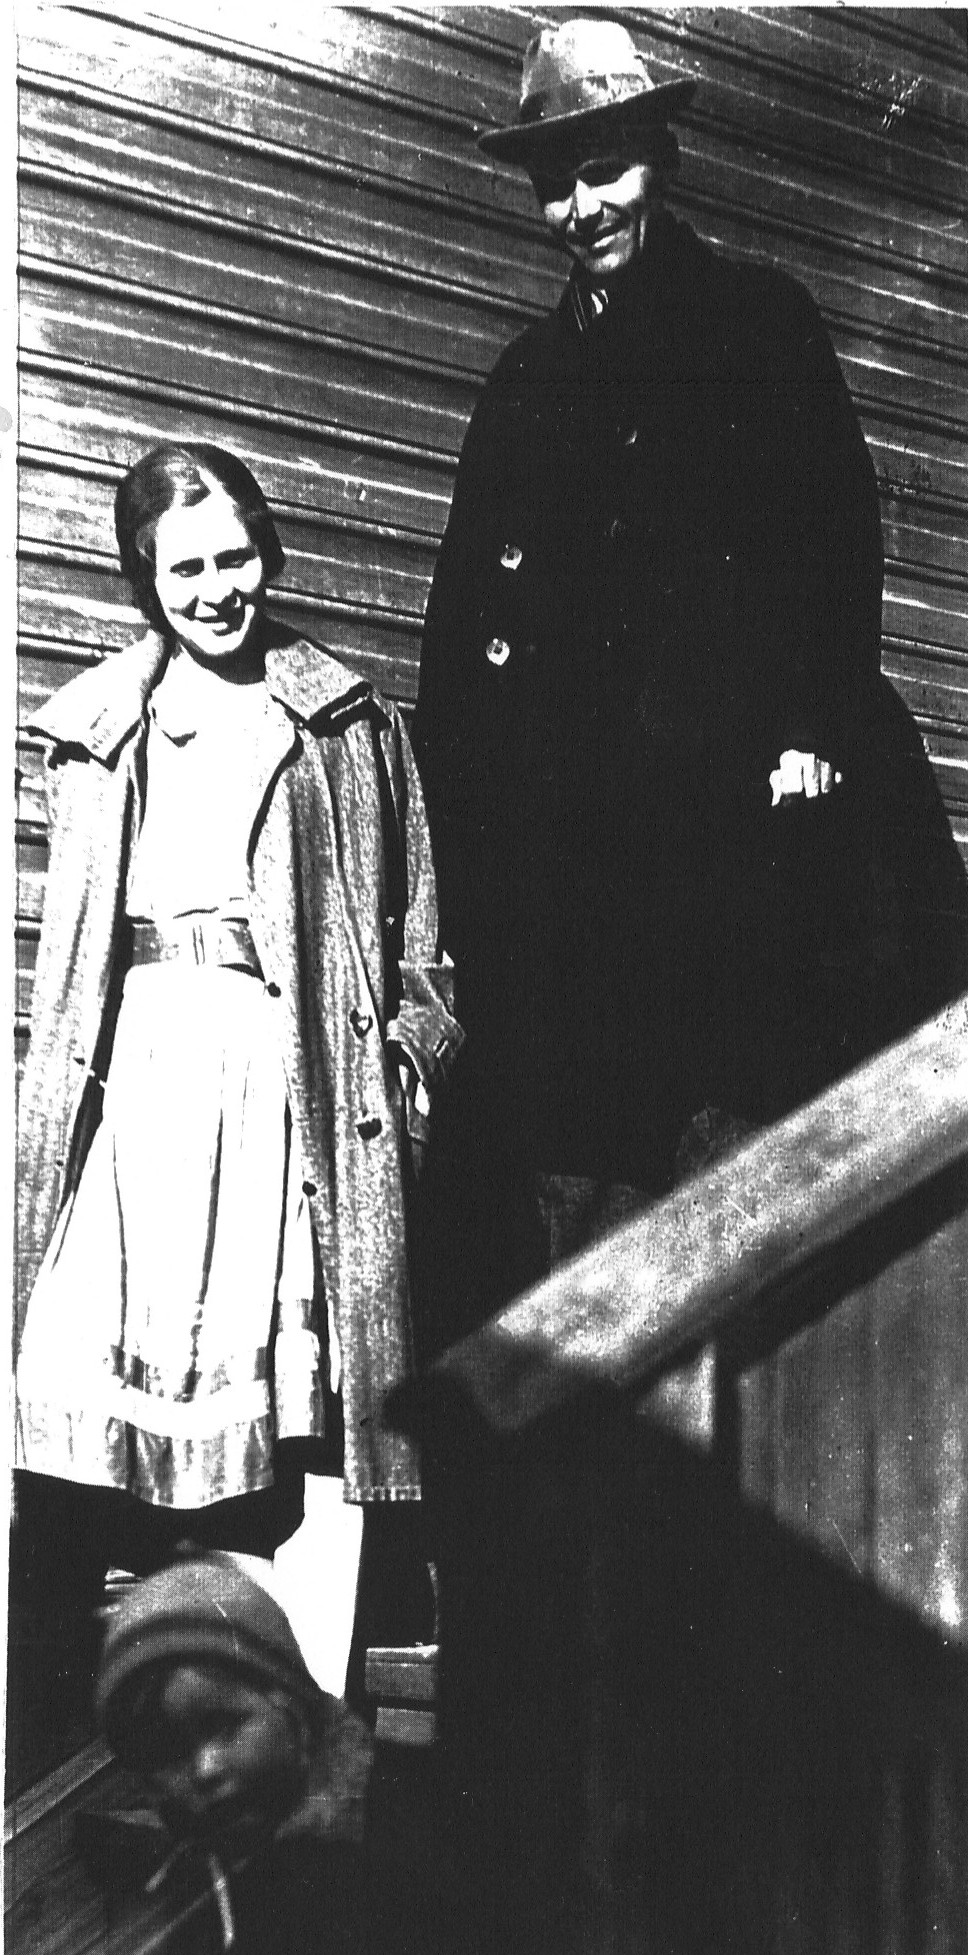 владелец дома Фефилов Лука Иванович, его жена Елизавета Константиновна, внизу дочь Татьяна. 1936 год